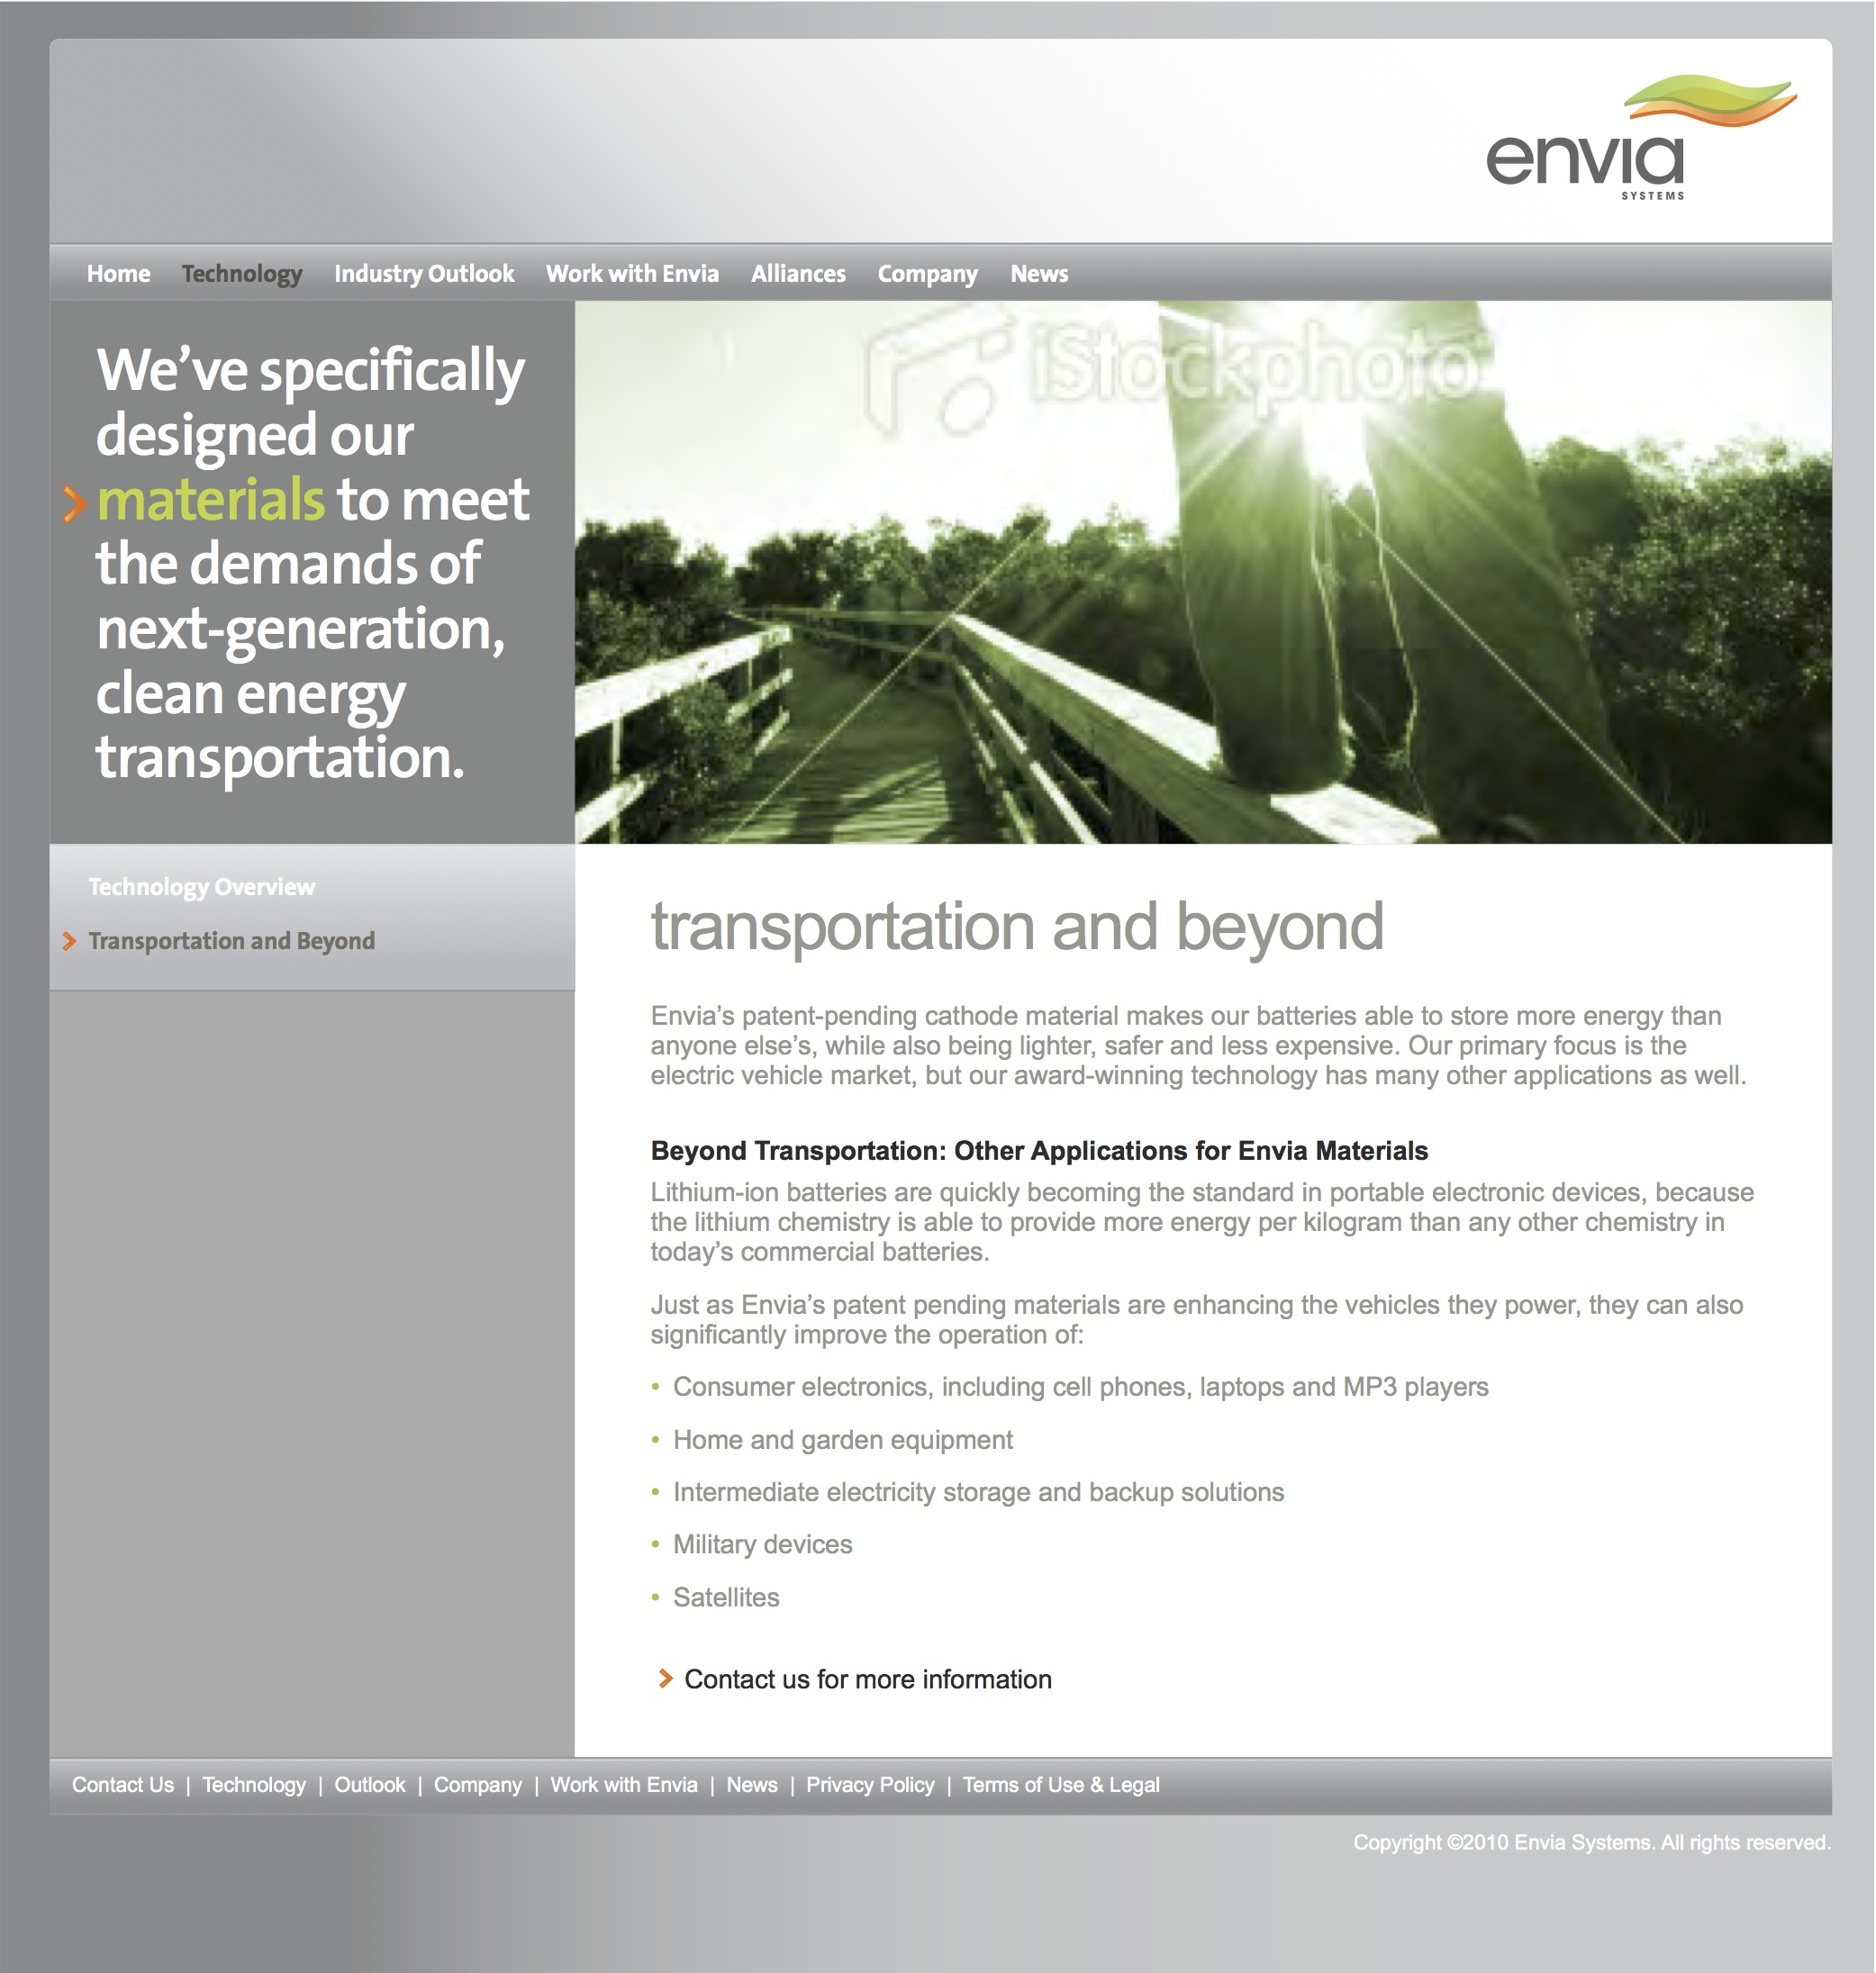 Envia_beyondTransportation_v1.6